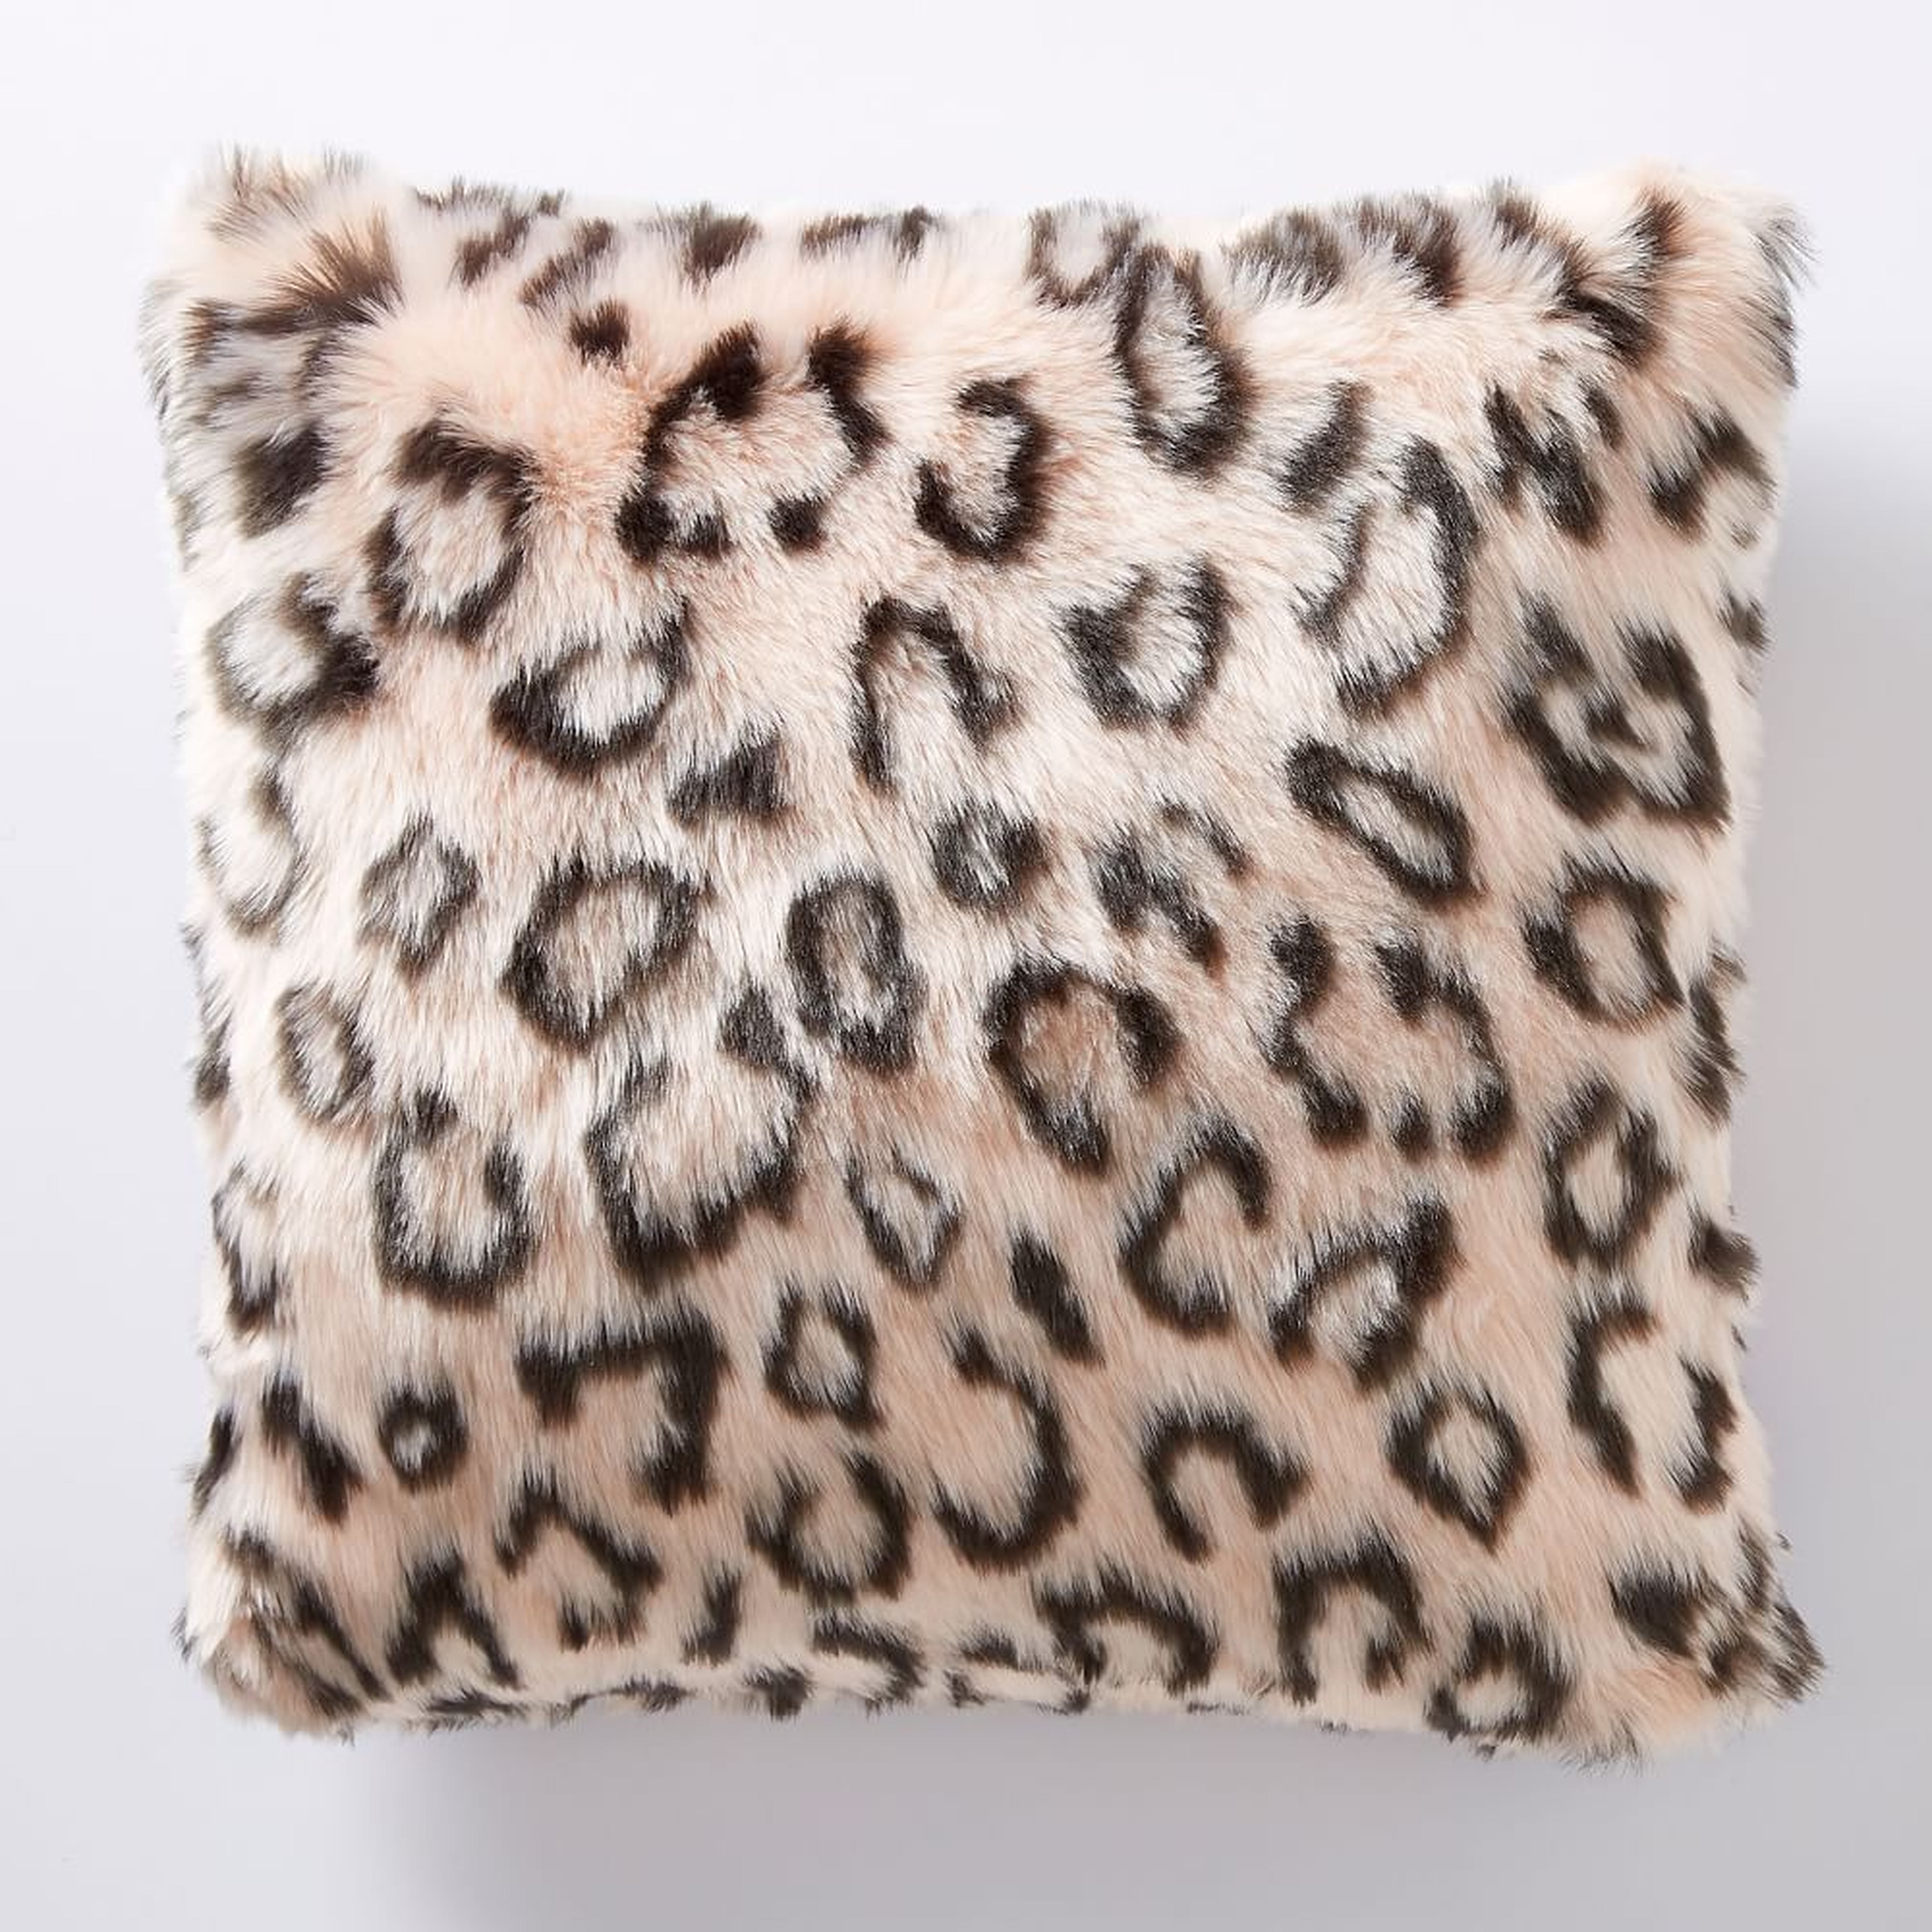 Emily &amp; Meritt Leopard Faux Fur Pillow Cover, 18x18, Blush Multi - Pottery Barn Teen